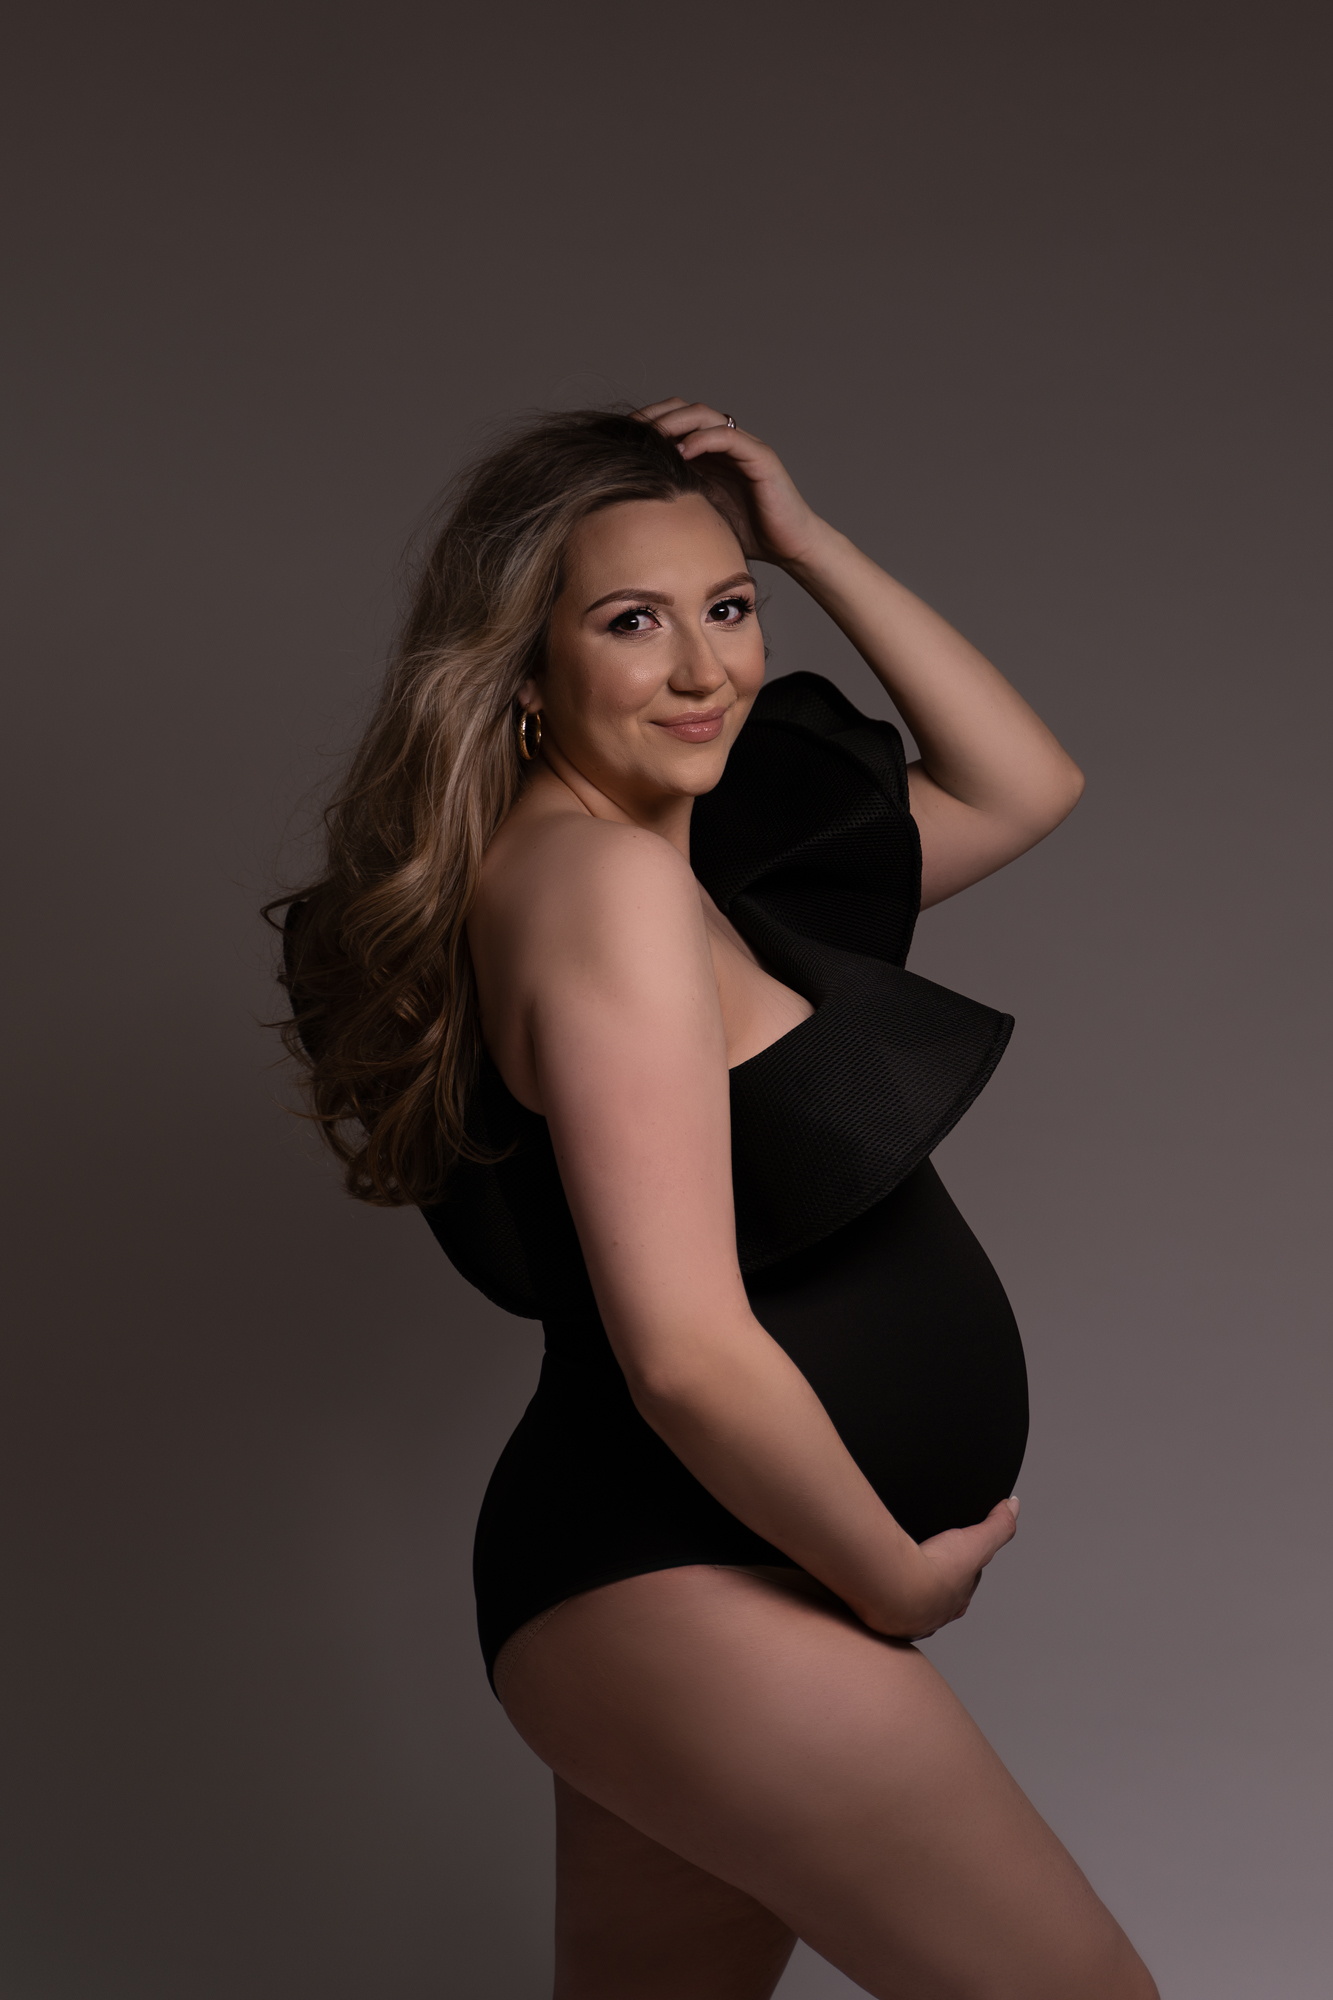 maternity photoshoot image of pregnant woman wearing a black bodysuit by edinburgh maternity photographer beautiful bairns photography